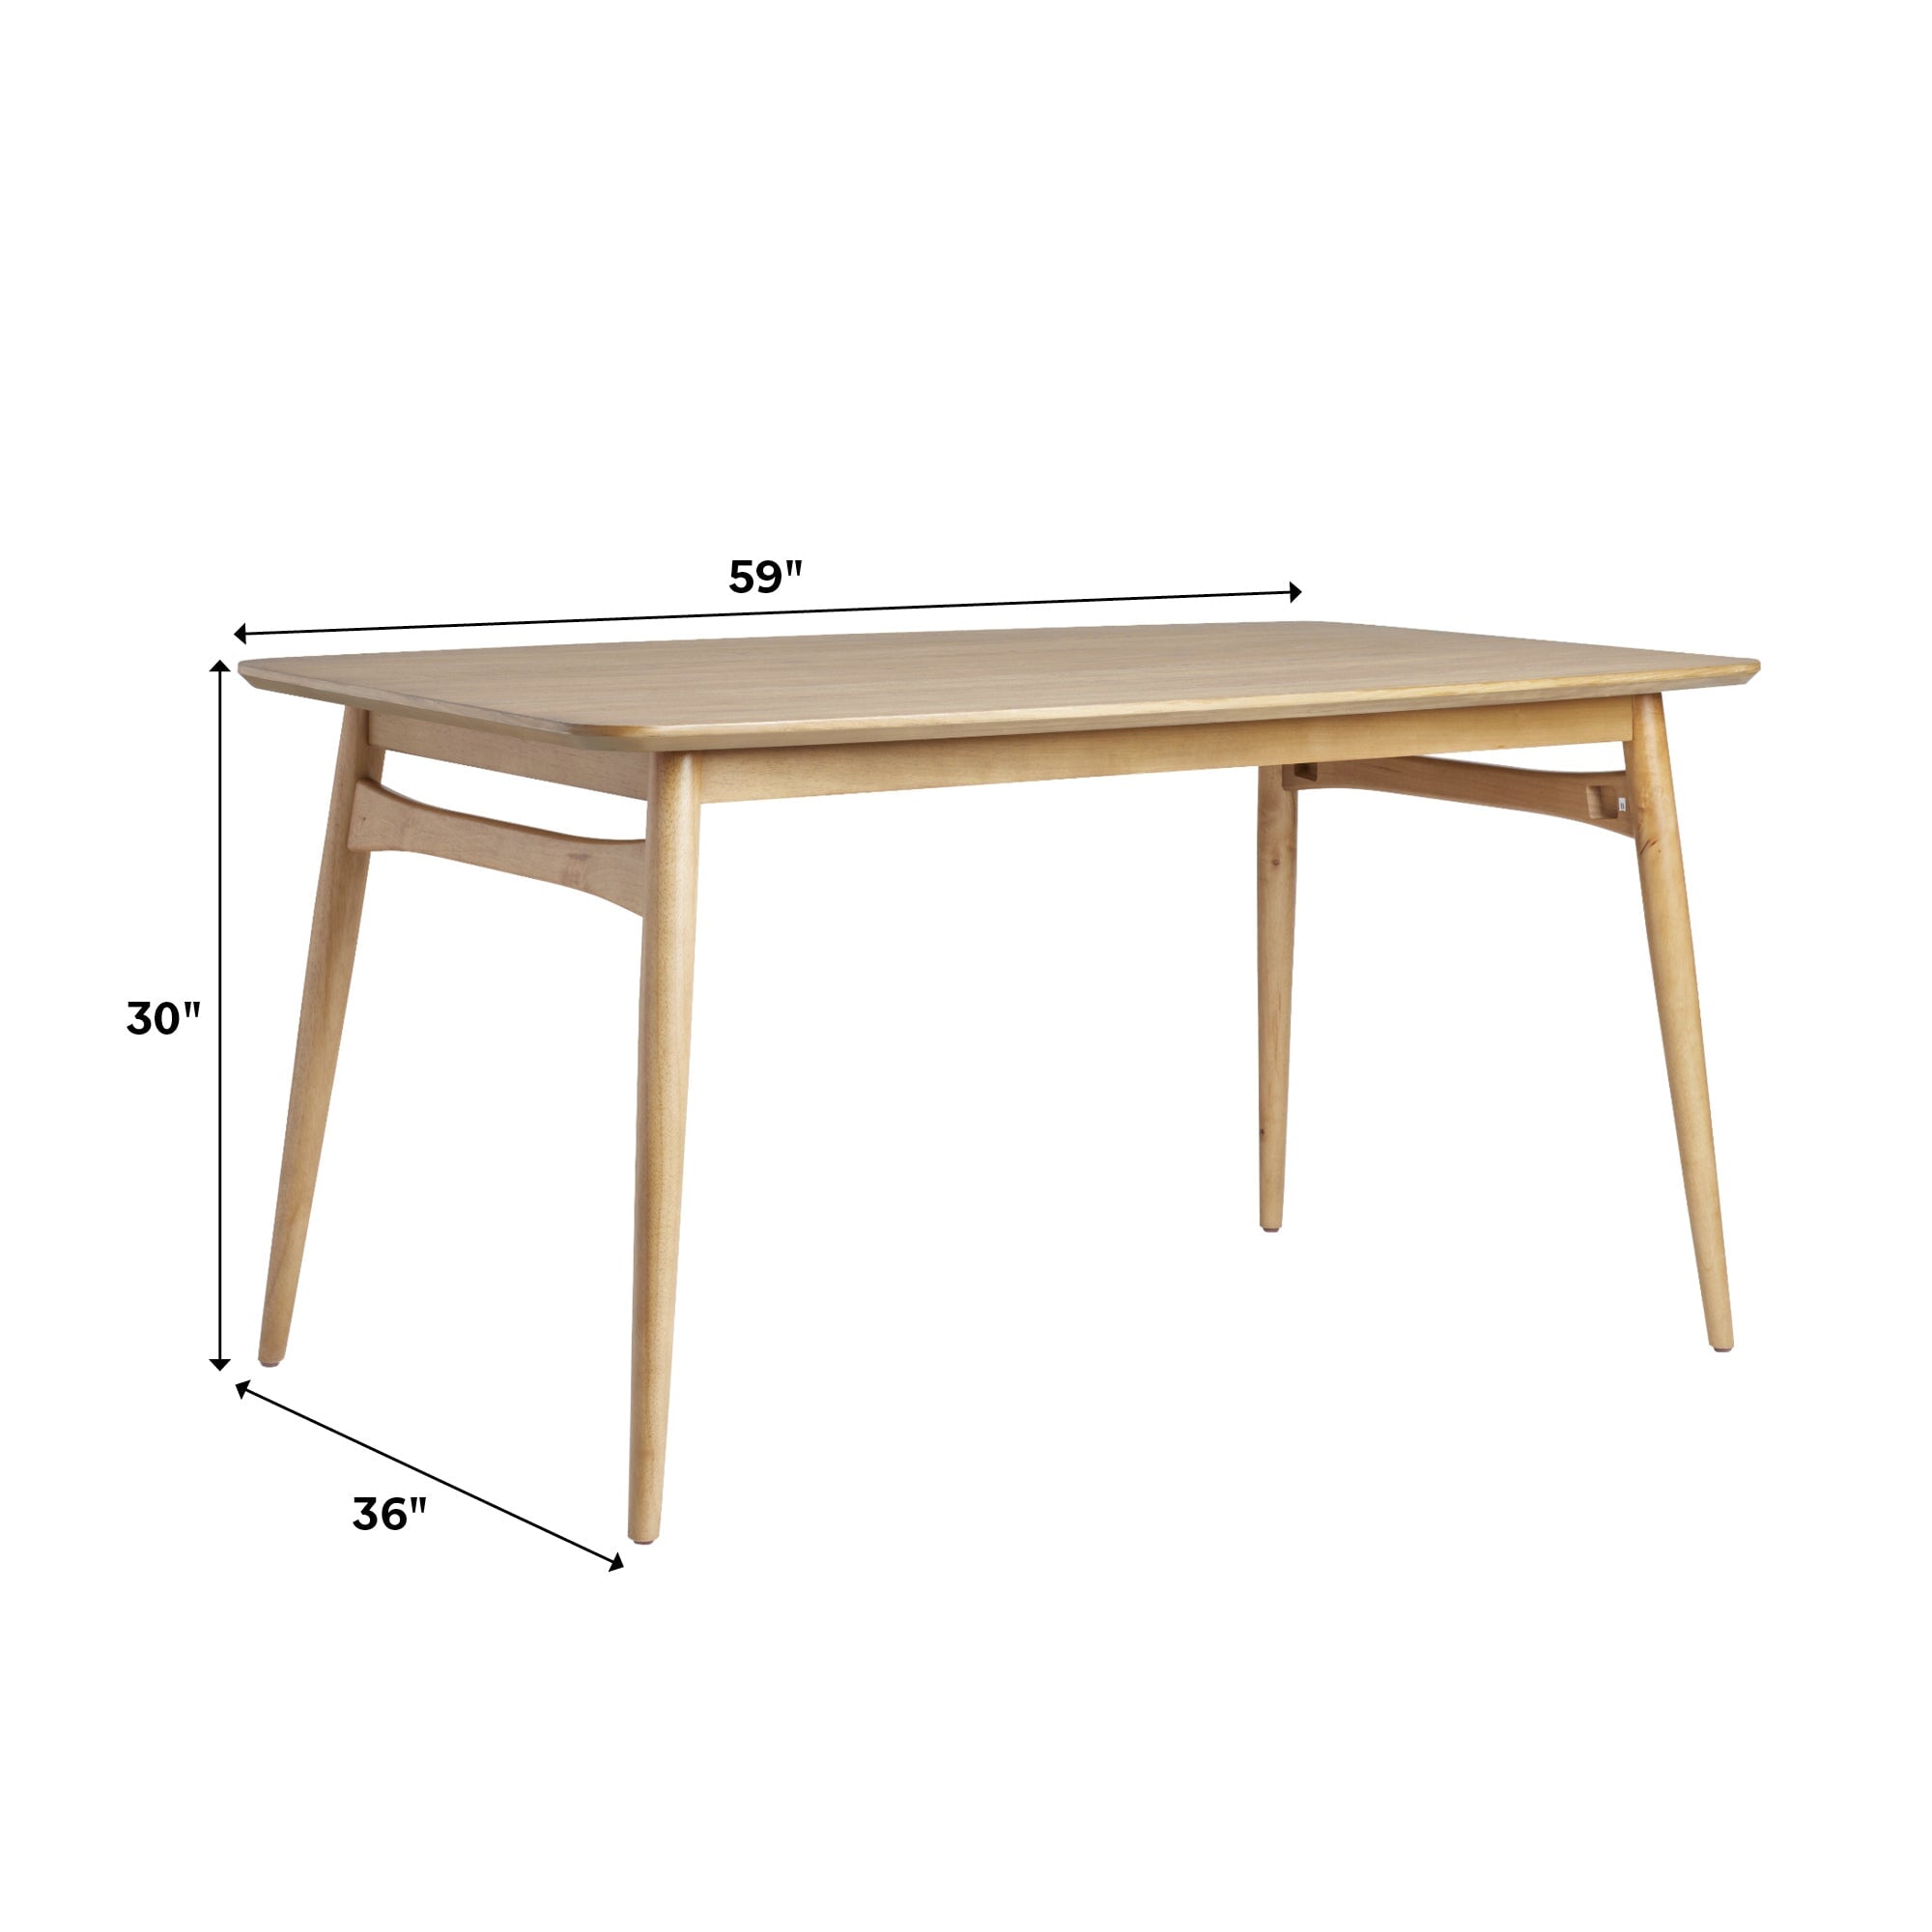 Taberu Mid-Century Modern 59" Wood Tapered Legs Dining Table